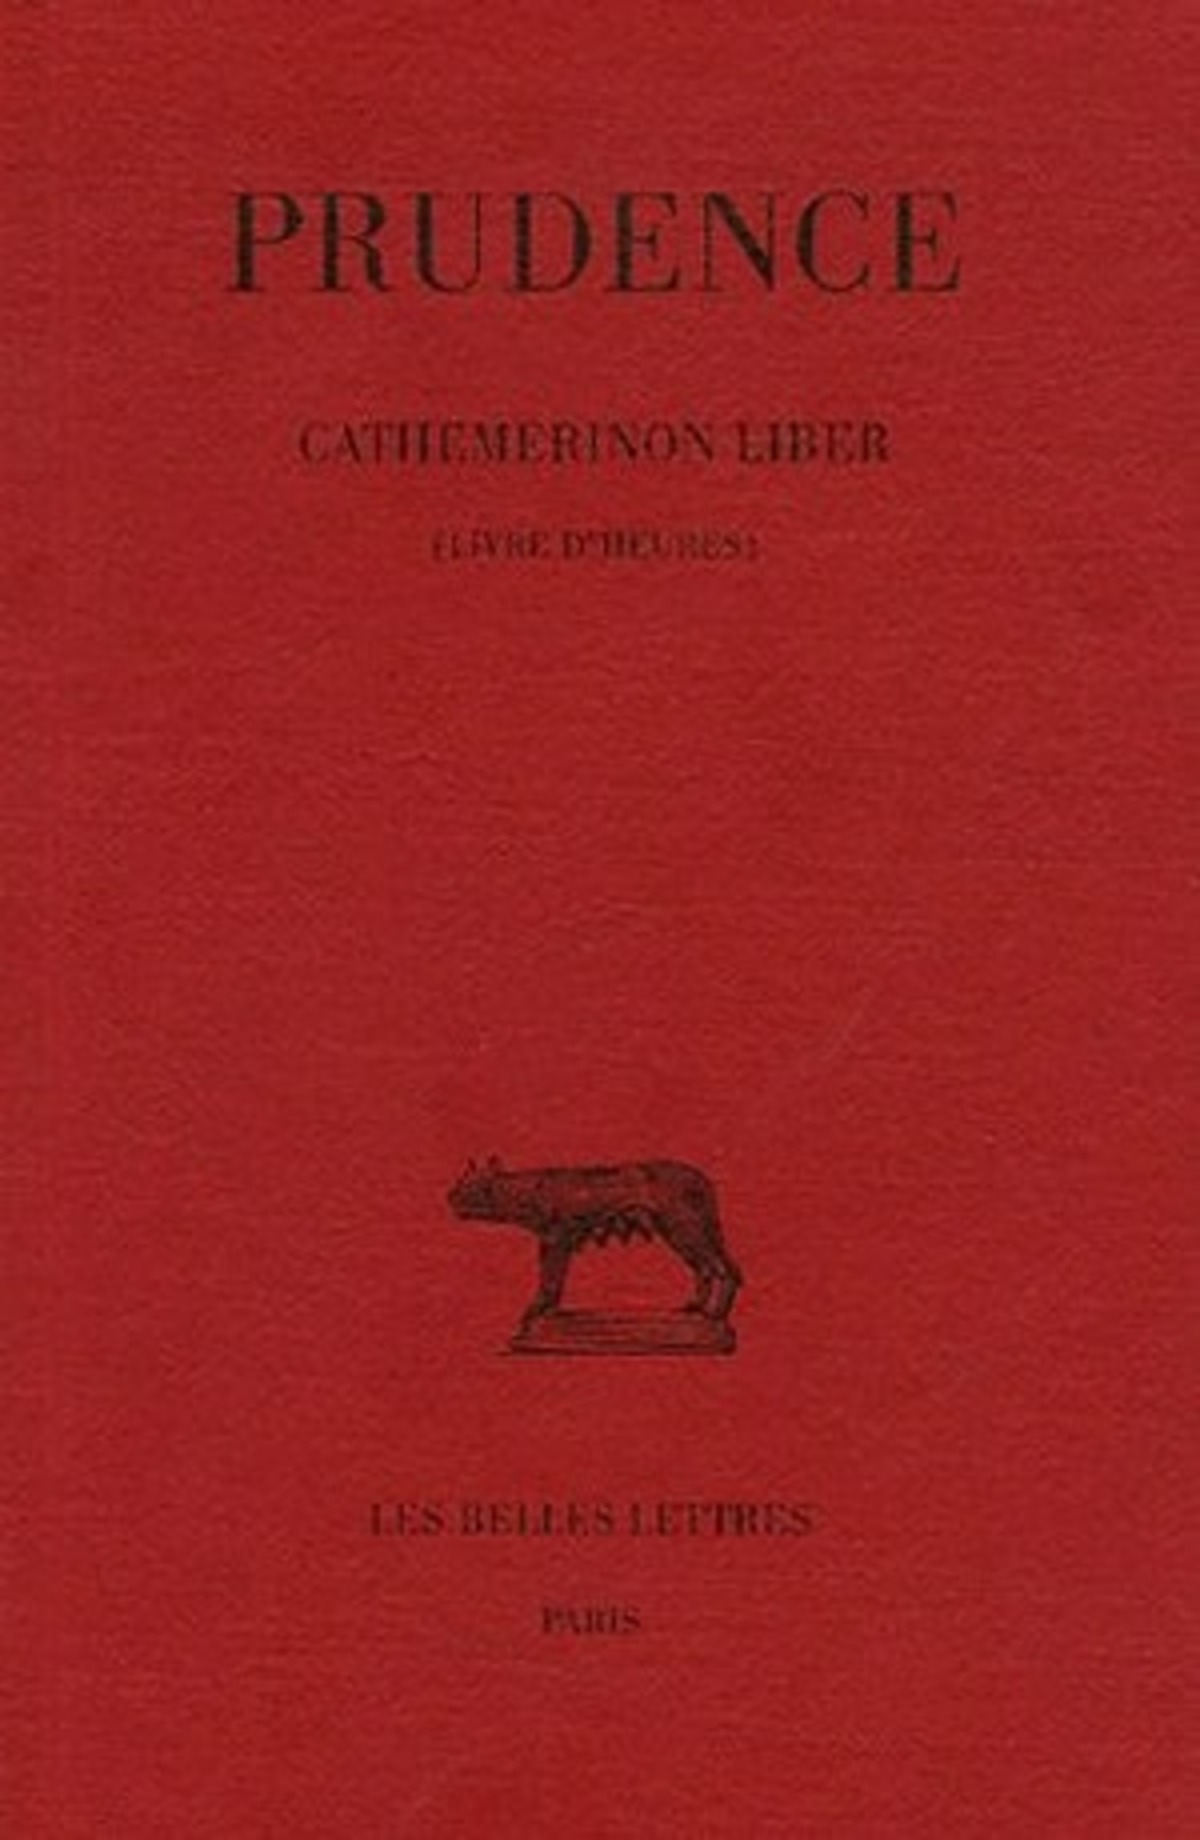 Tome I : Cathemerinon Liber (Livre d'heures)